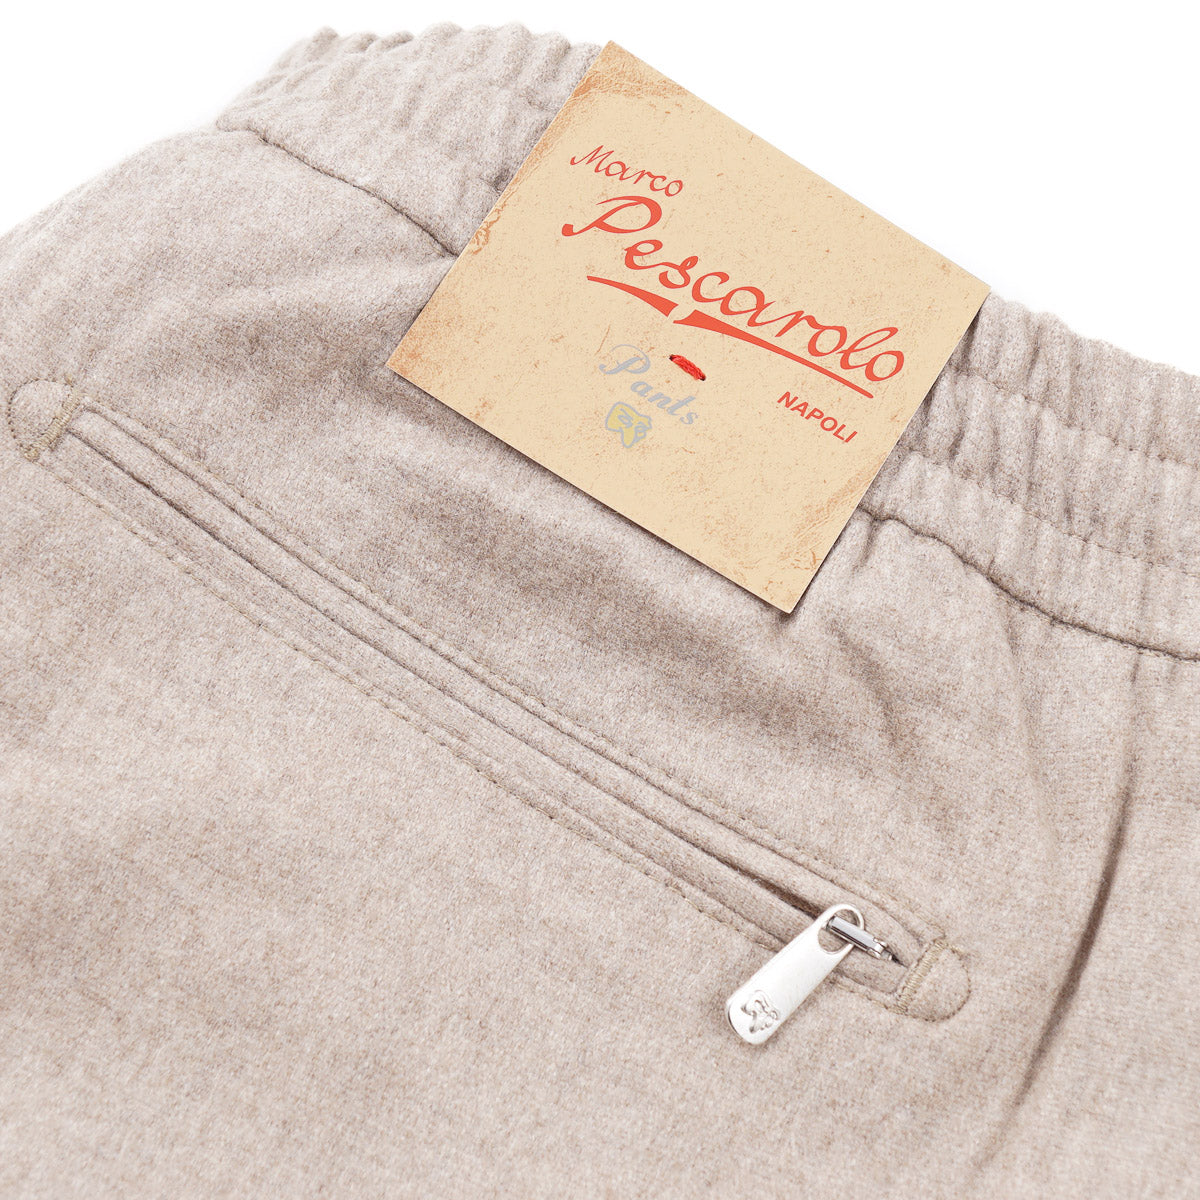 Marco Pescarolo Cashmere Jogger Pants - Top Shelf Apparel